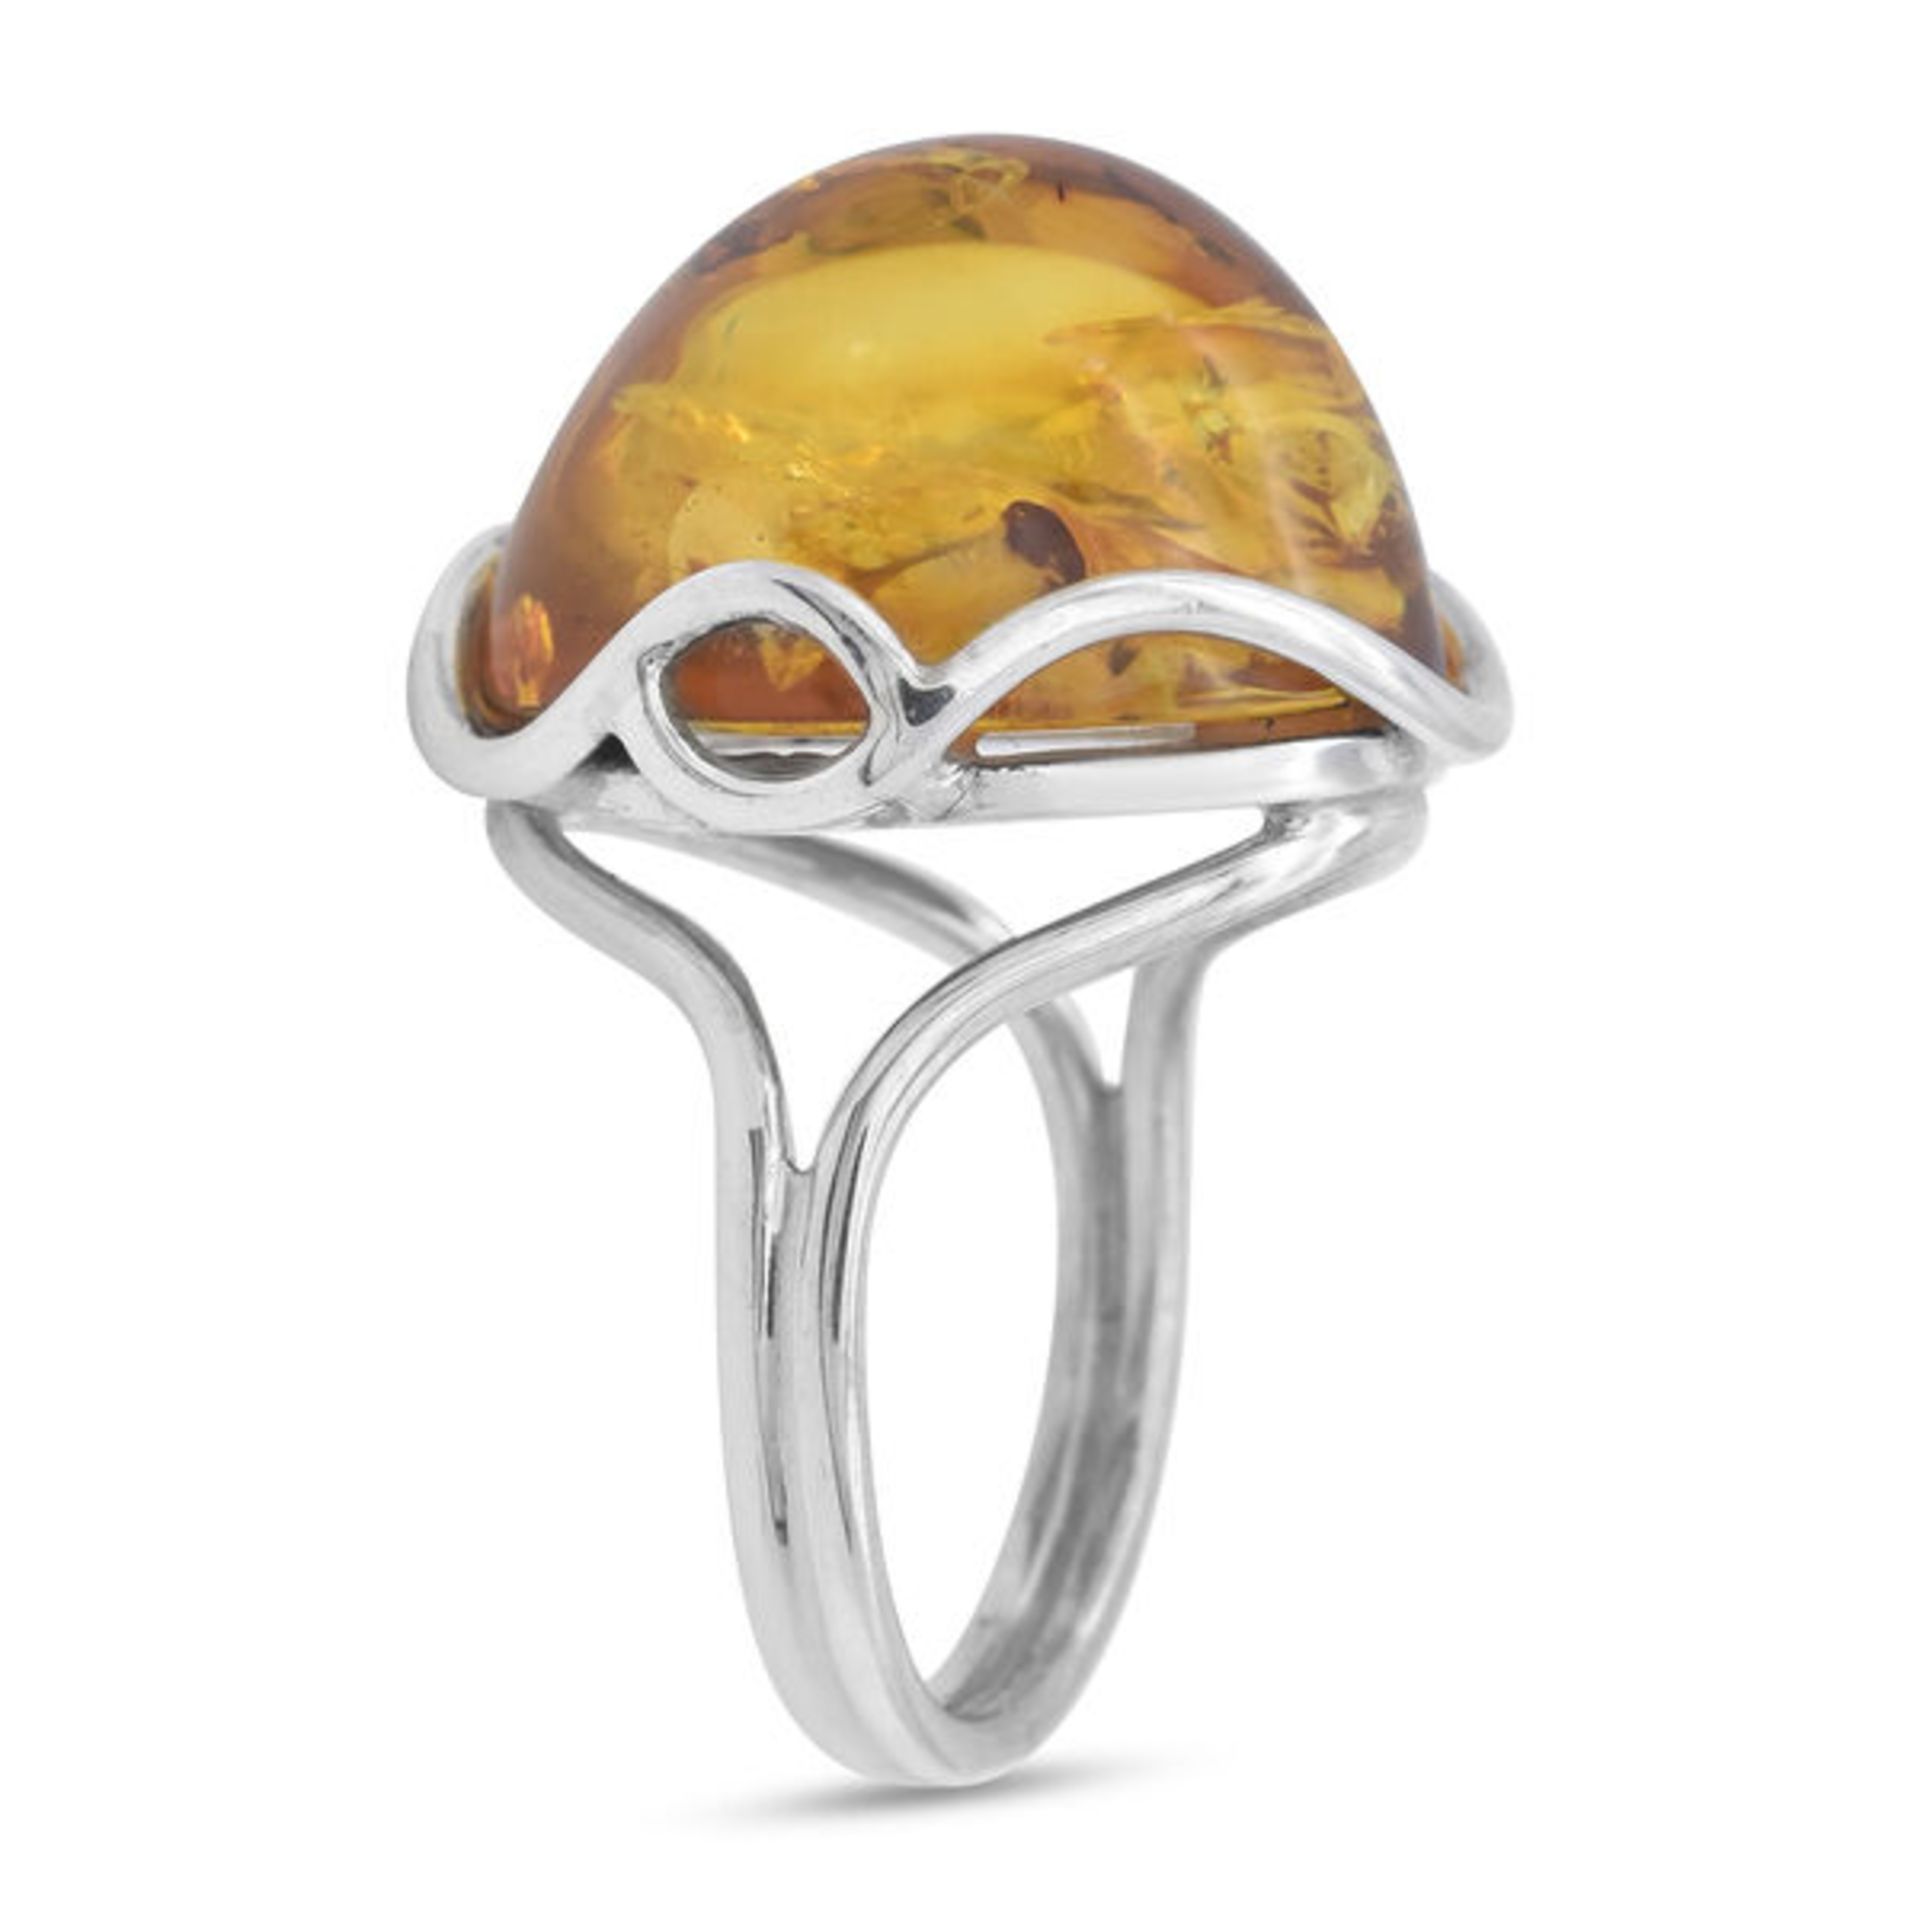 NEW!! Natural Baltic Amber Ring - Image 2 of 4